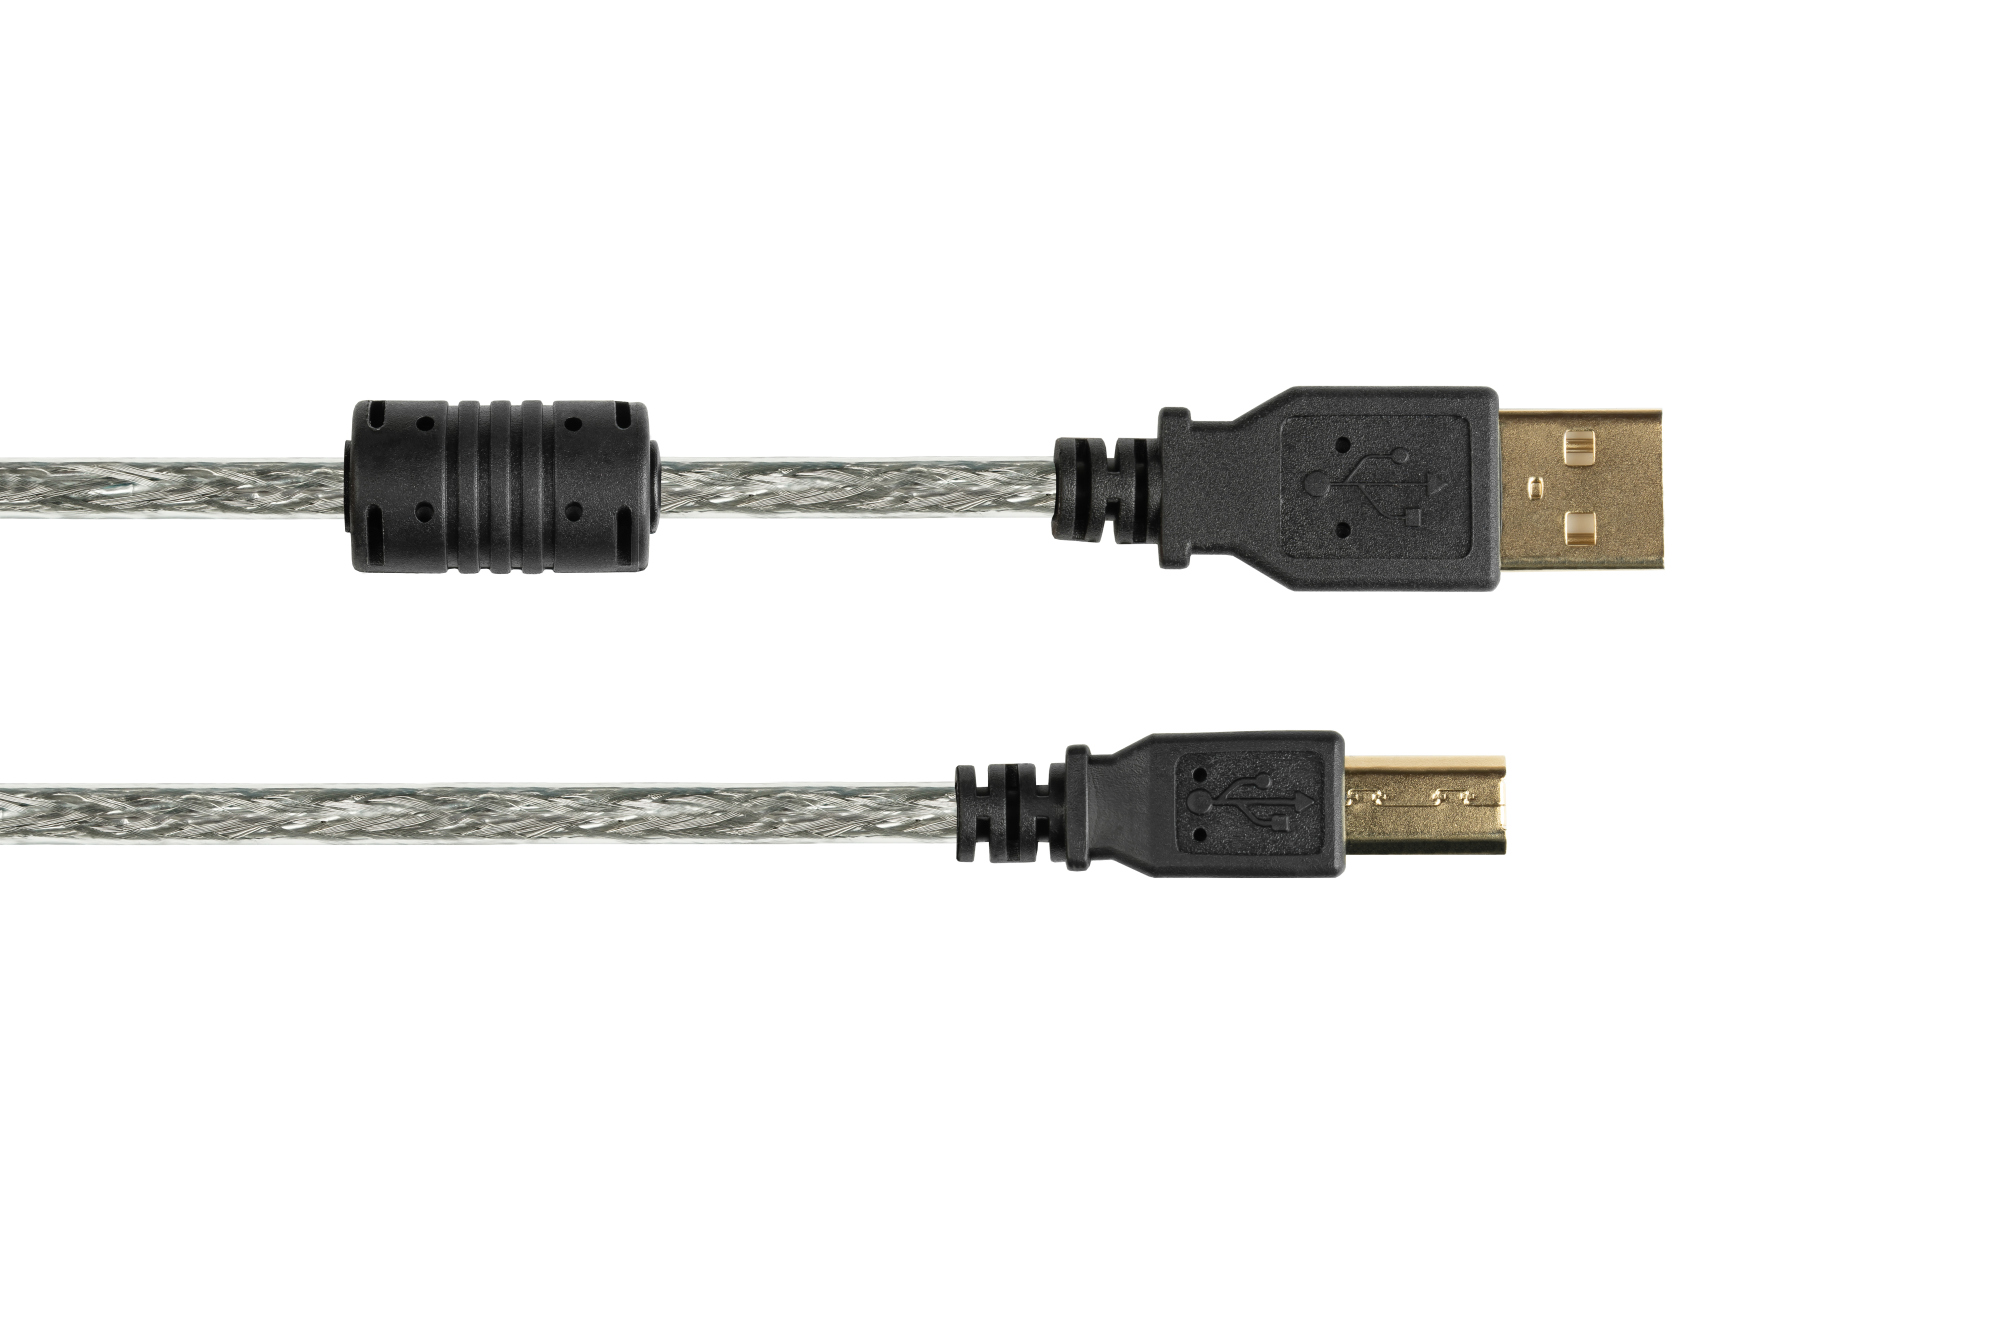 Anschlusskabel USB 2.0 Stecker A an Stecker B, High Quality mit Ferritkern und Goldkontakten, transp